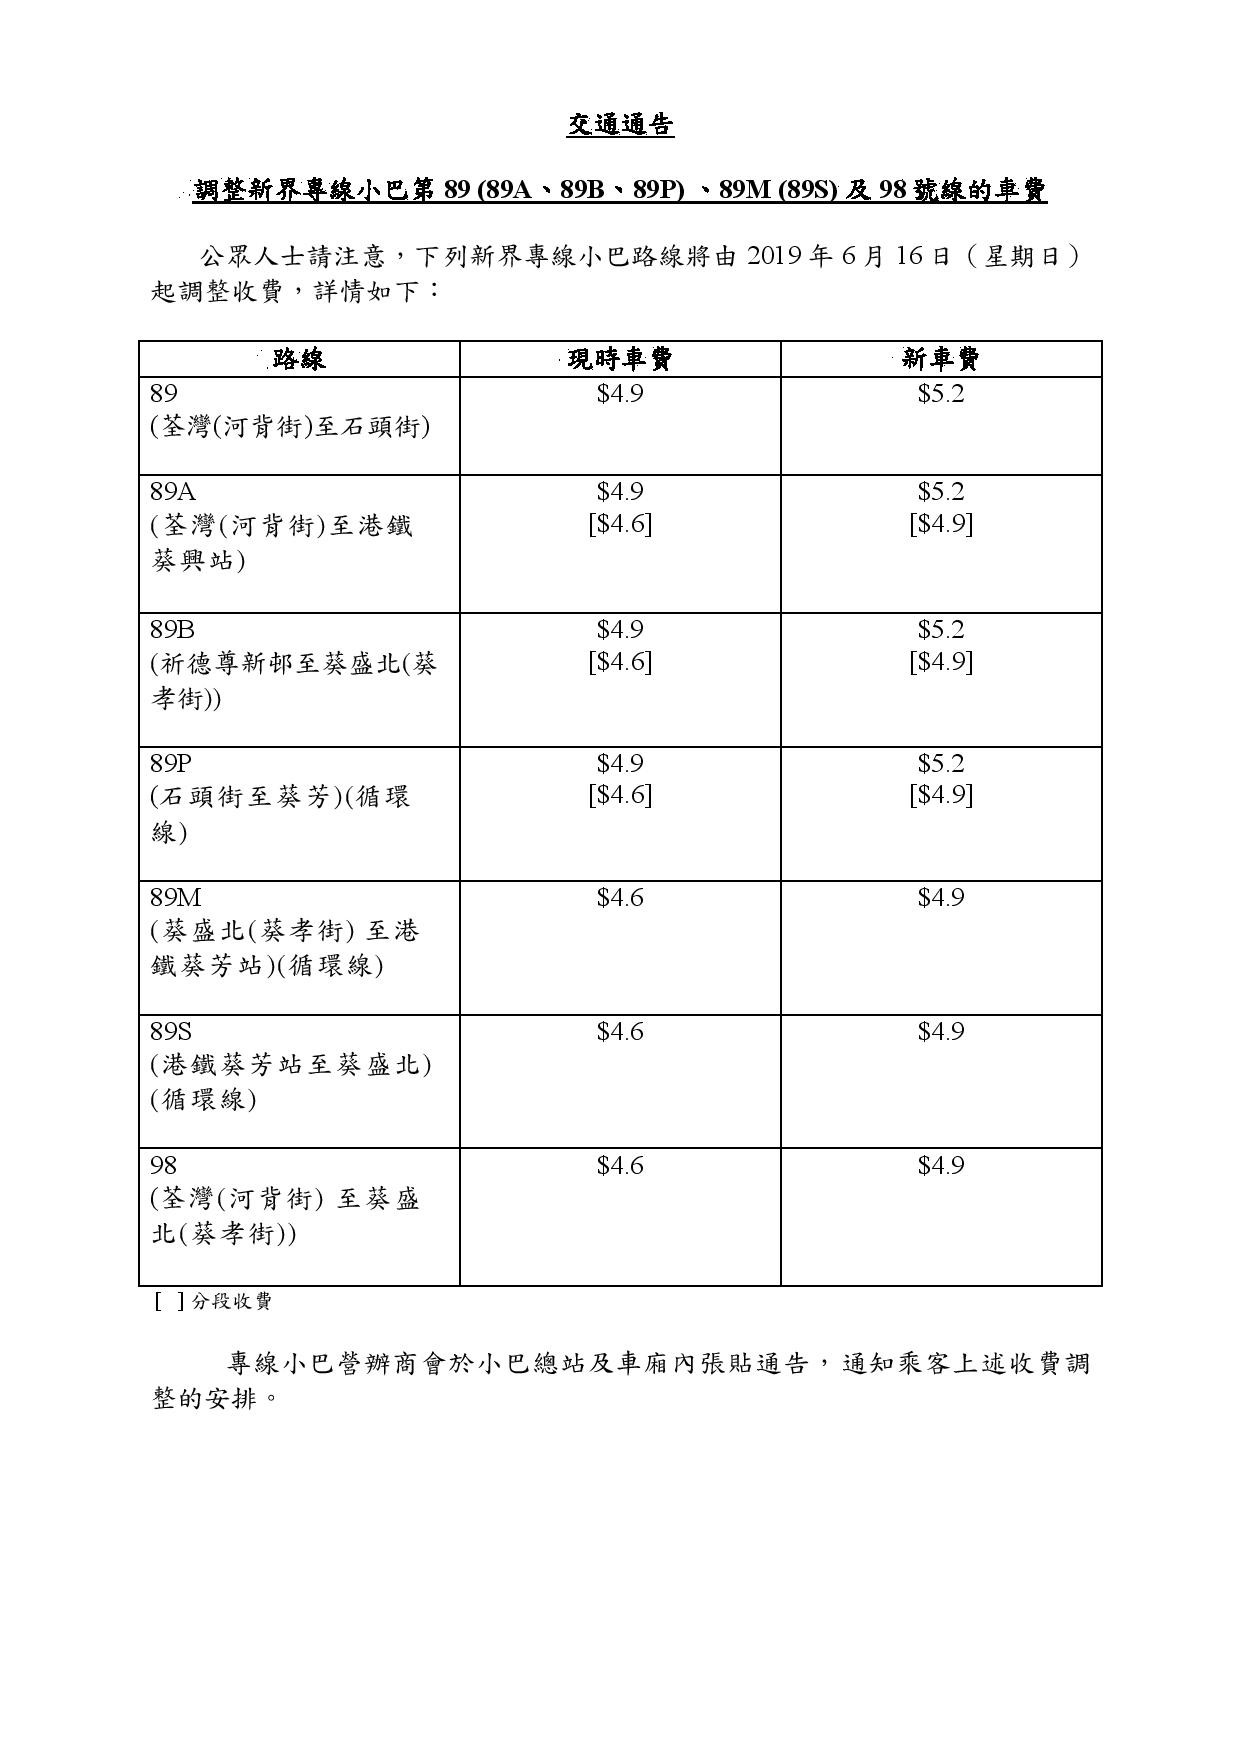 ta_gmb 89 fare increase (wef 16.6.2019)_chin-page-001.jpg